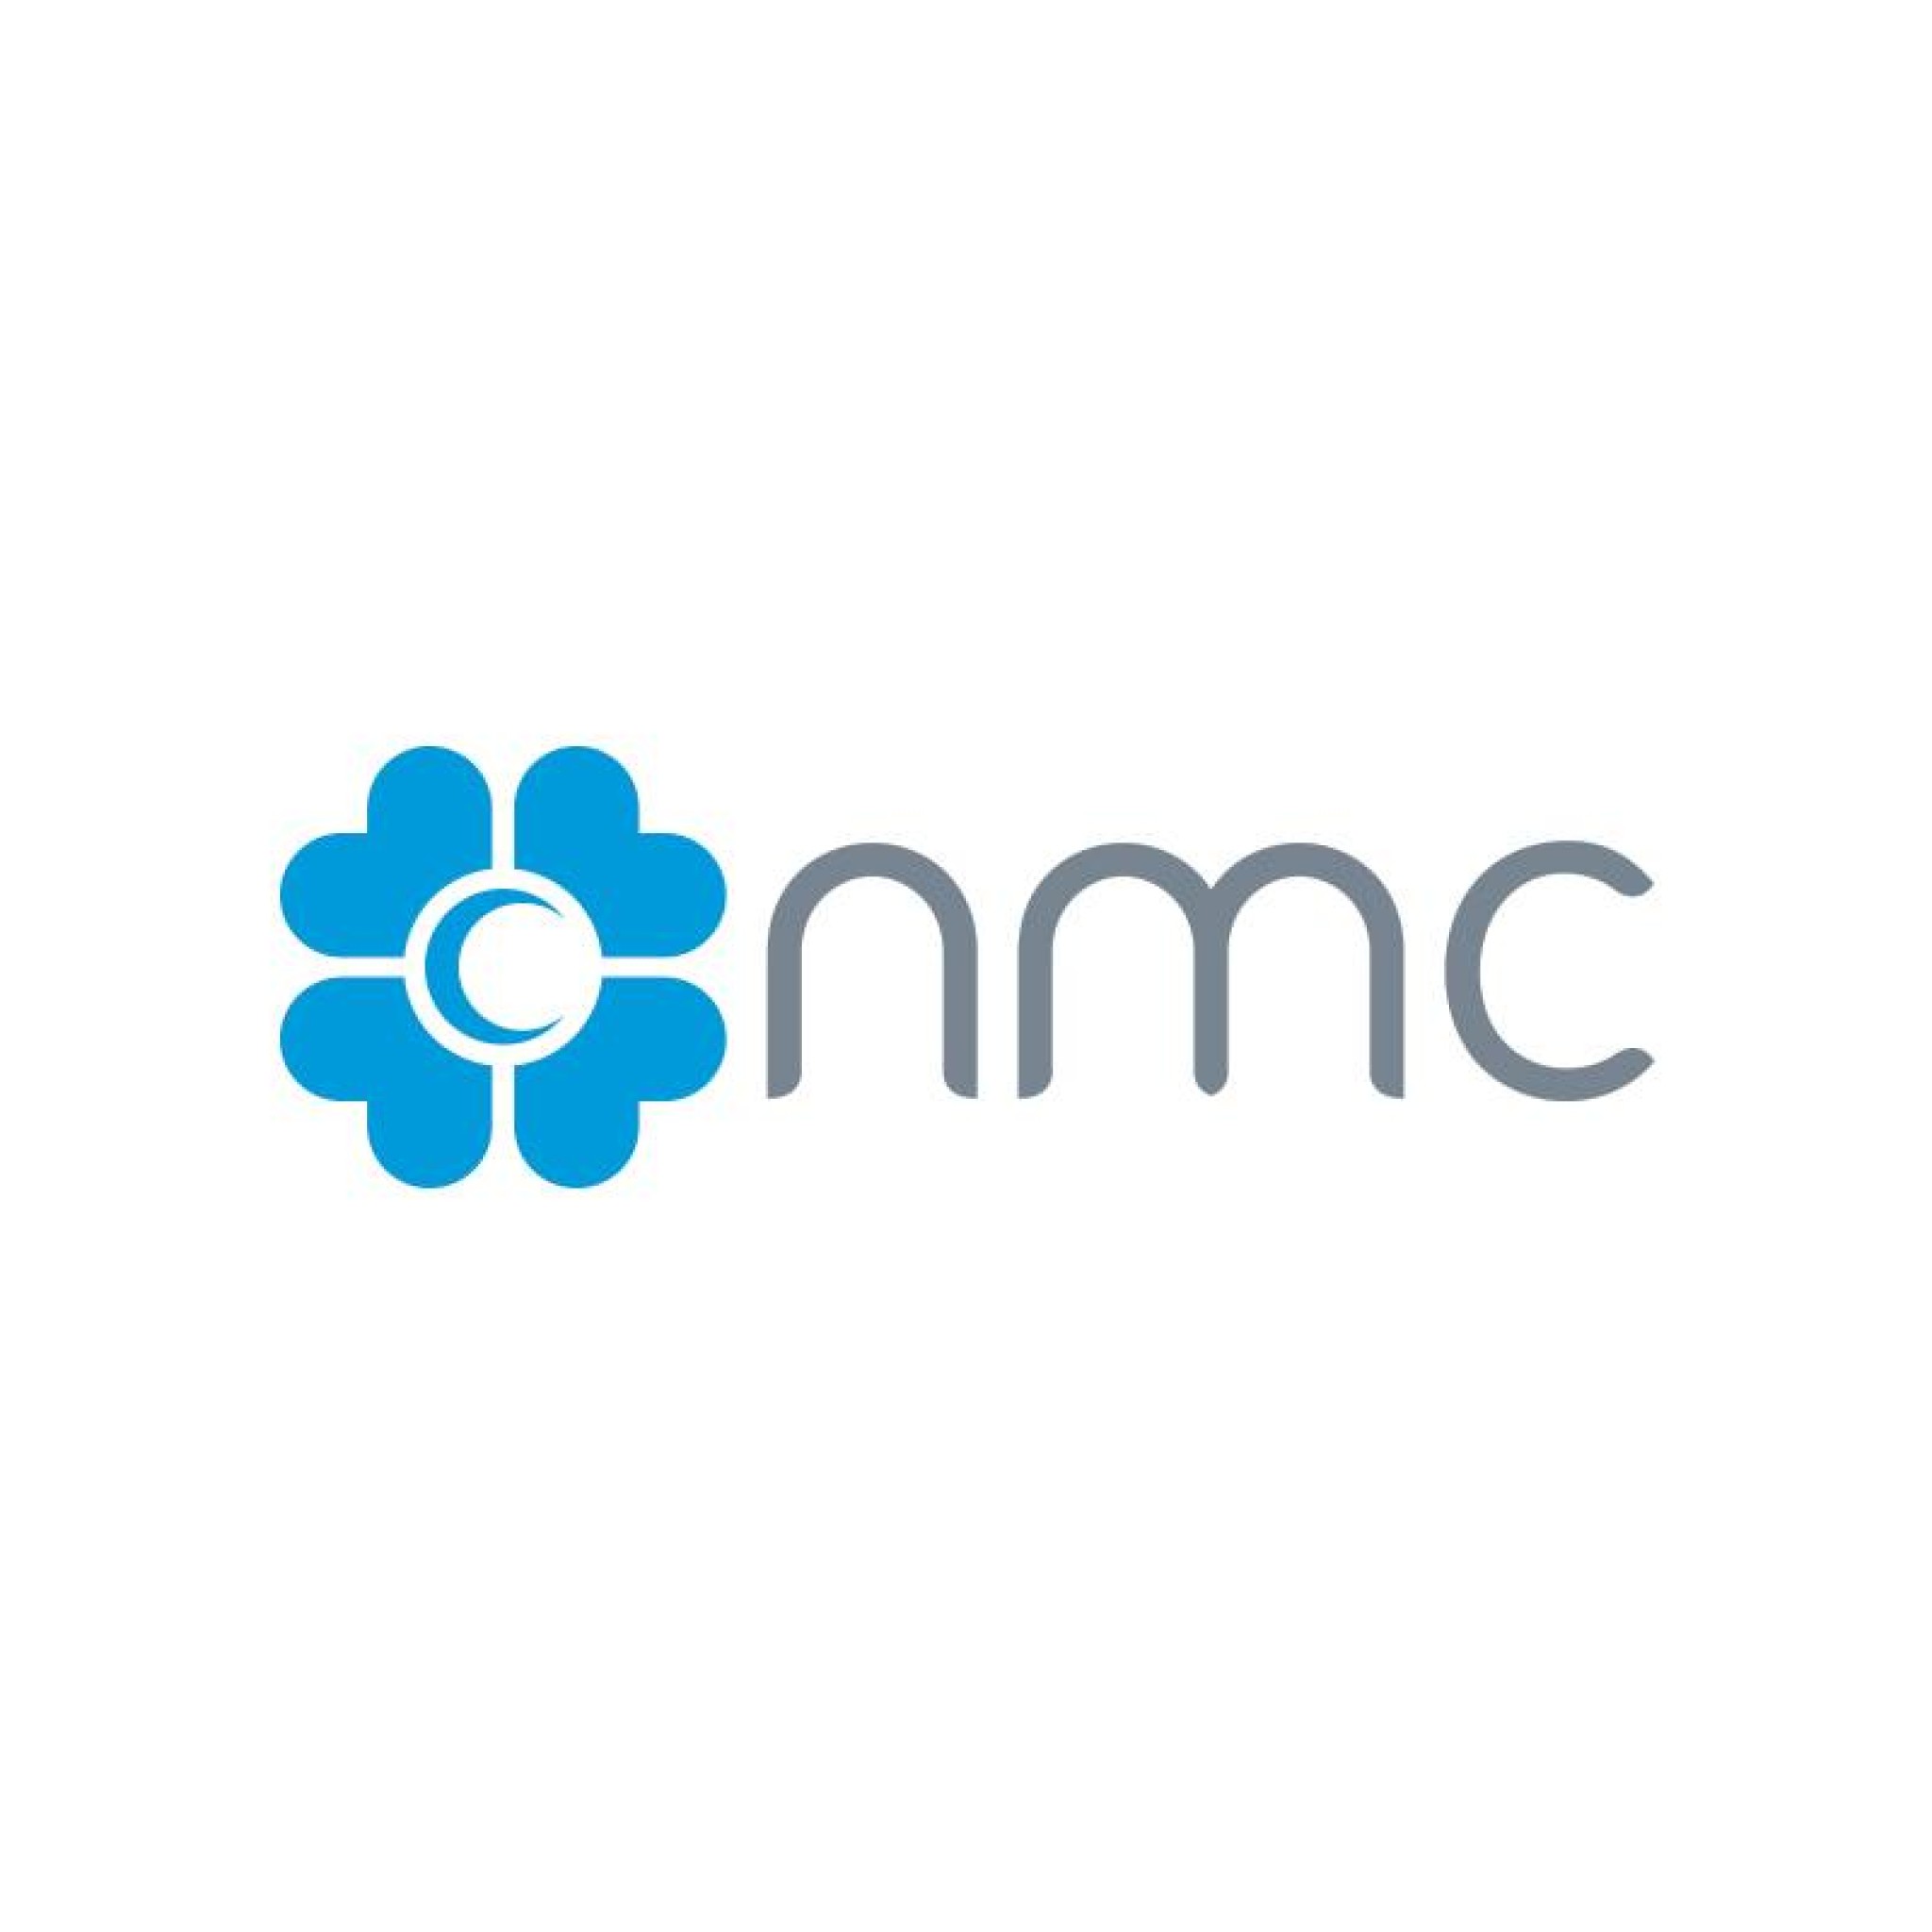 NMC Specialty Hospital - Al Nahda